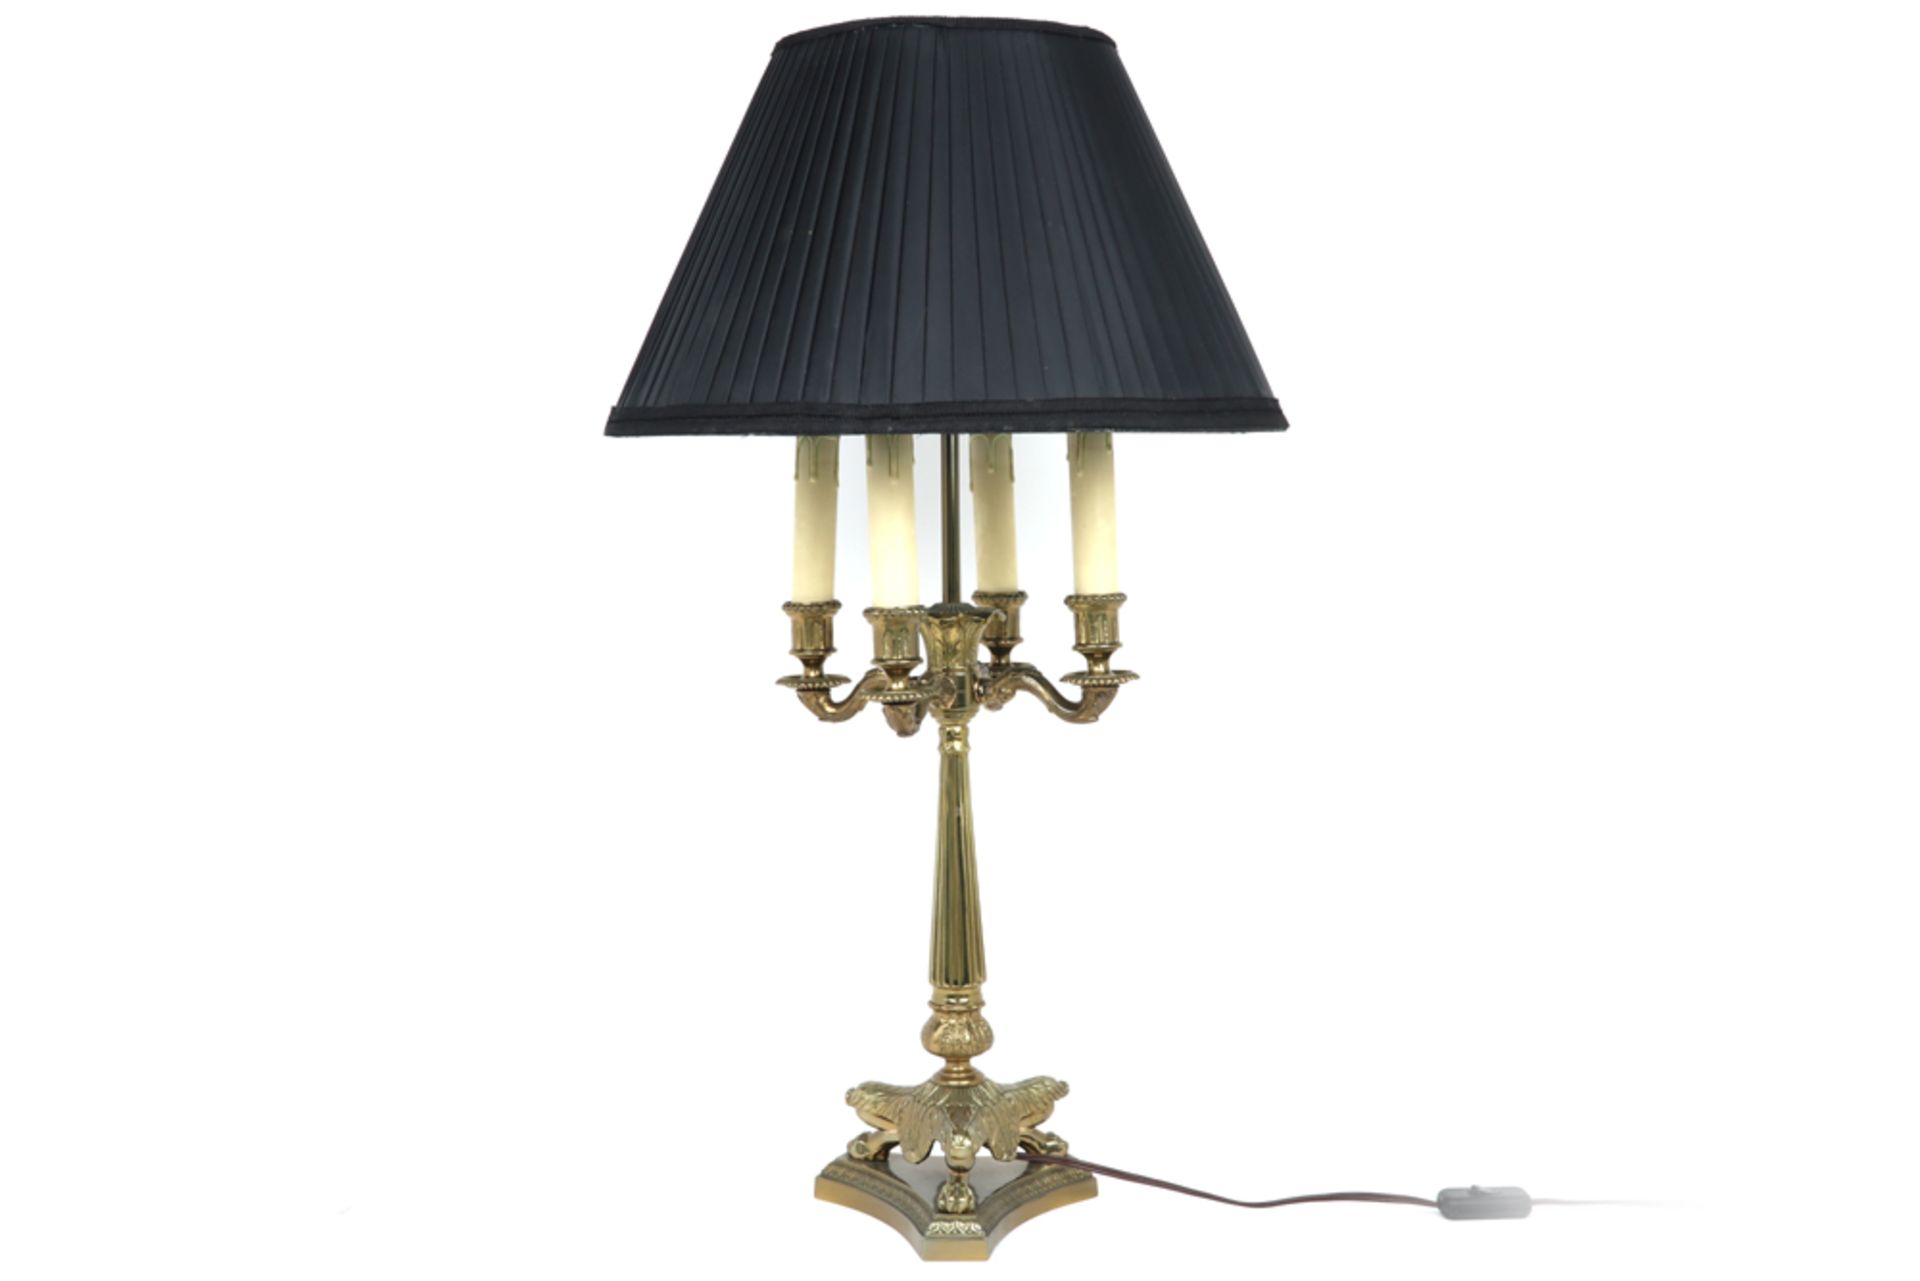 table lamp with a bronze base and a black shade || Schemerlamp met voet in brons en met zwarte kap -